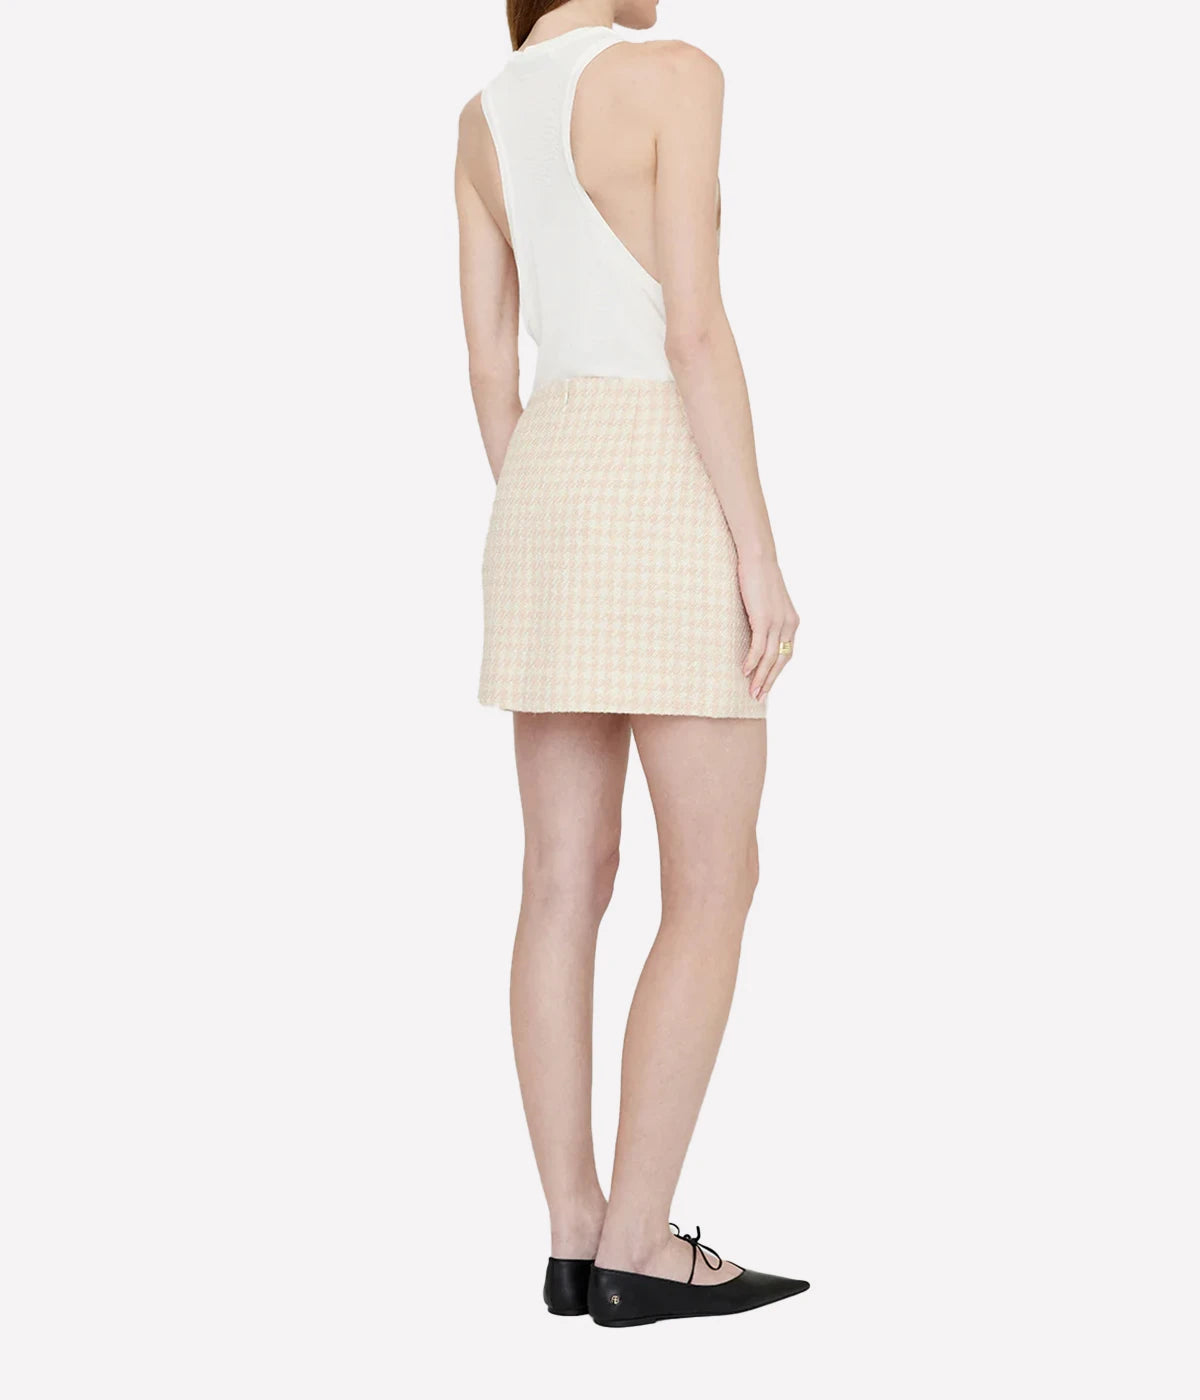 Vanessa Skirt in Cream Peach Houndstooth